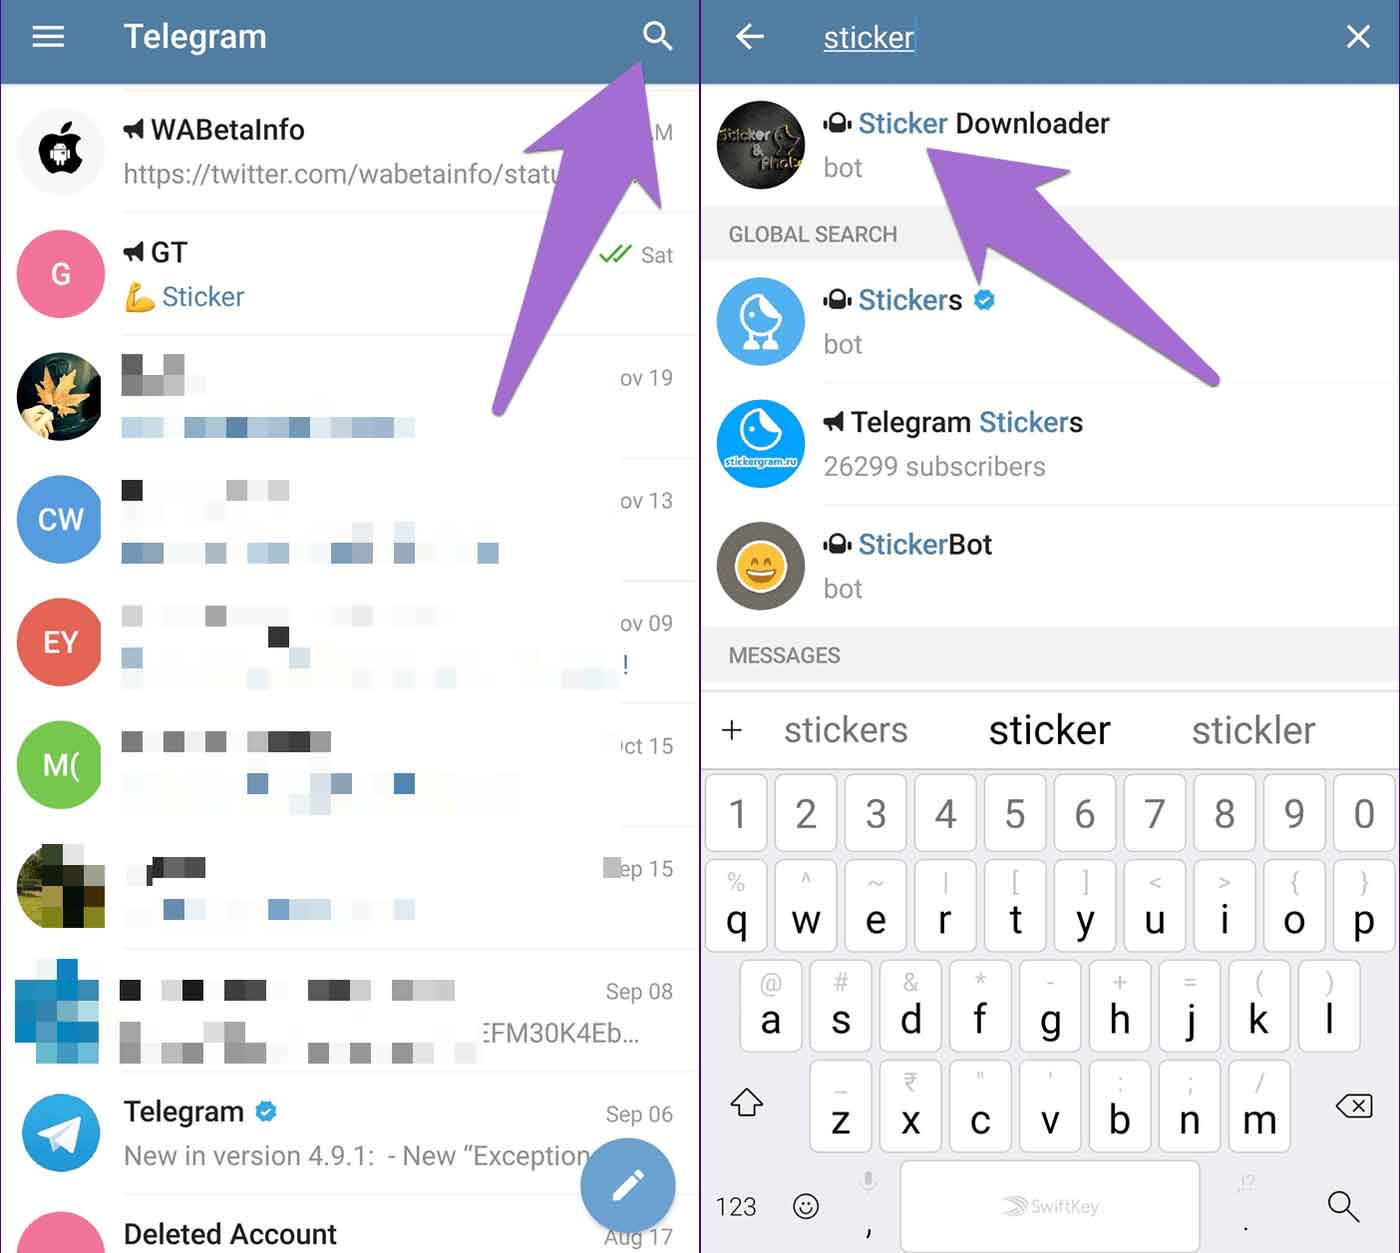 انتقال استیکر تلگرام به واتس اپ